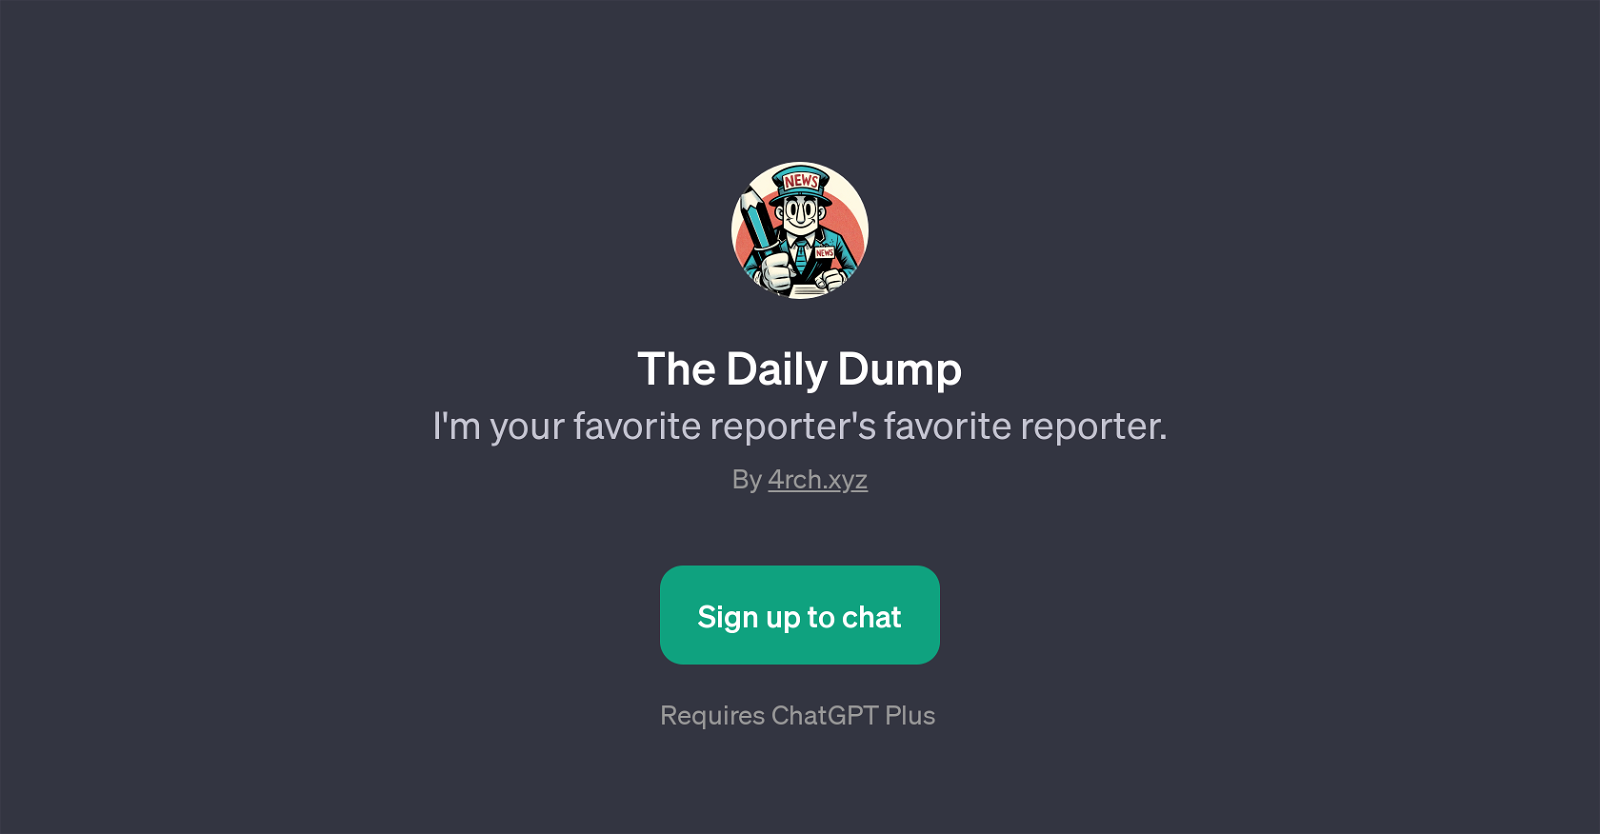 The Daily Dump website